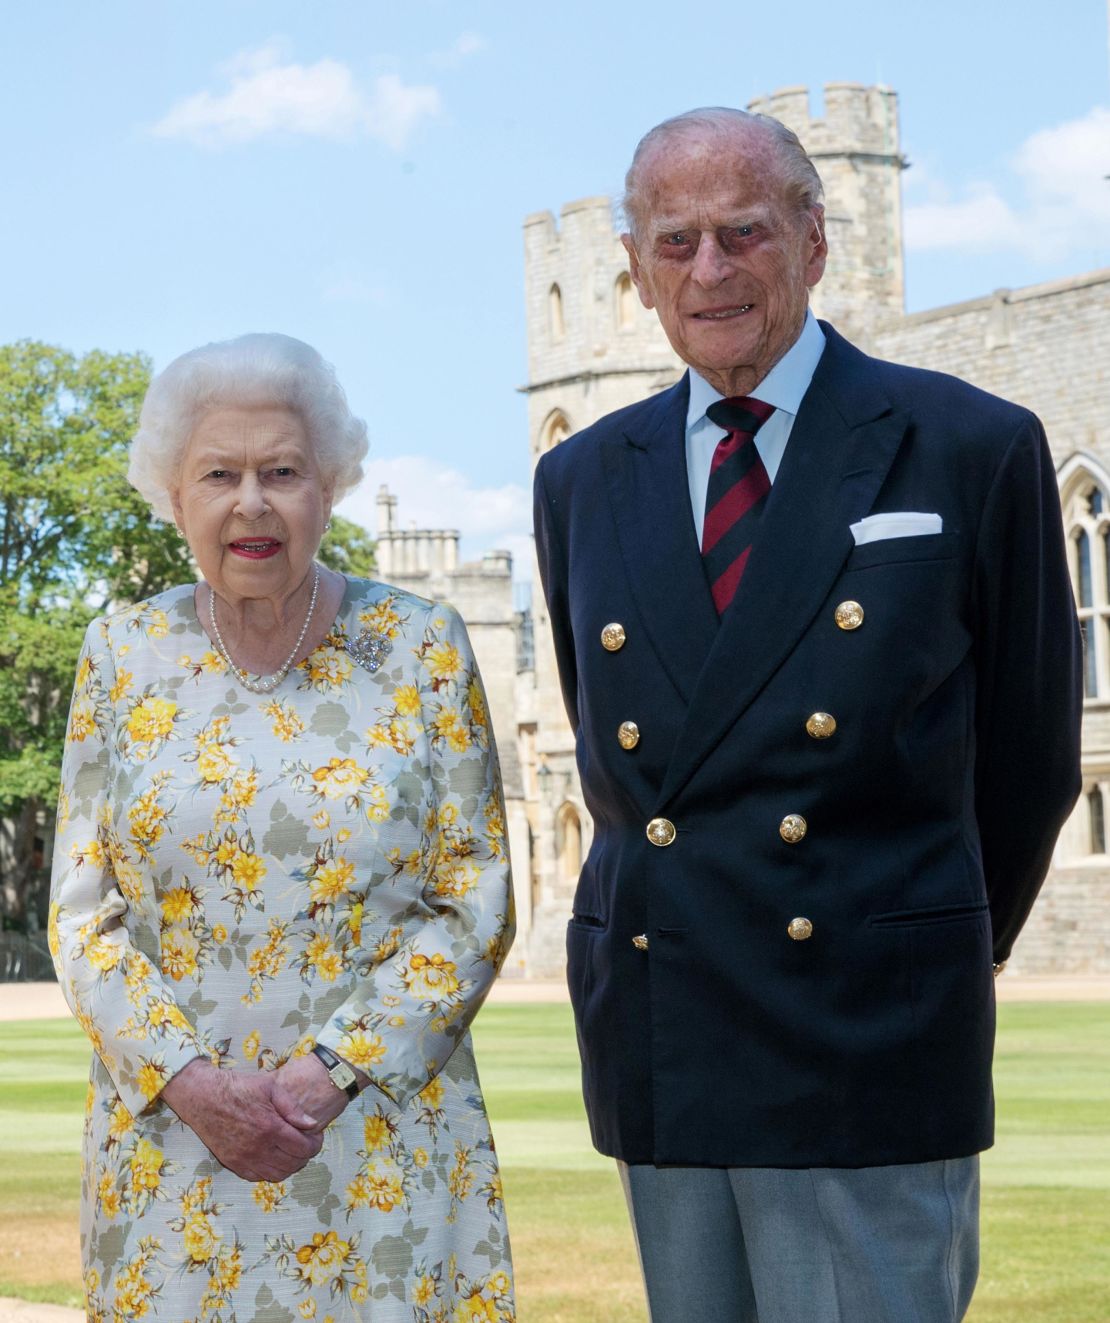 Queen Elizabeth II and the Duke of Edinburgh posed for a portrait last June in the quadrangle of Windsor Castle ahead of Philip's 99th birthday.